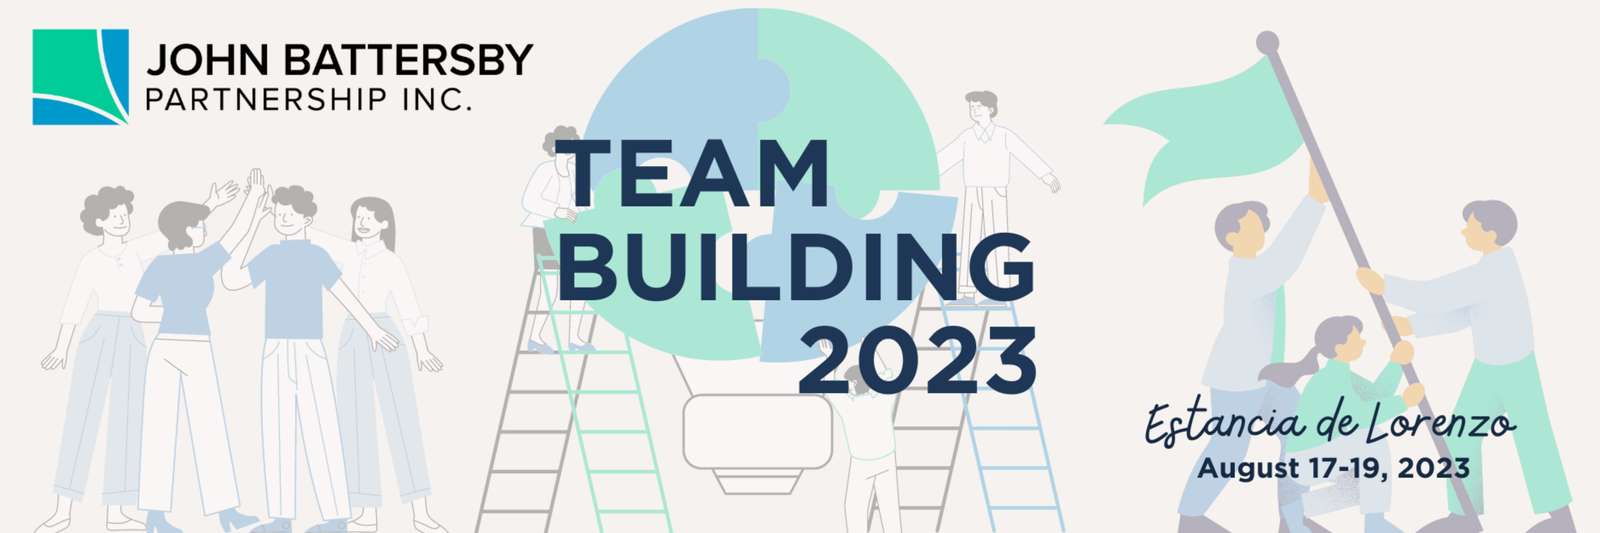 JBPI Teambuilding 2023 online puzzle